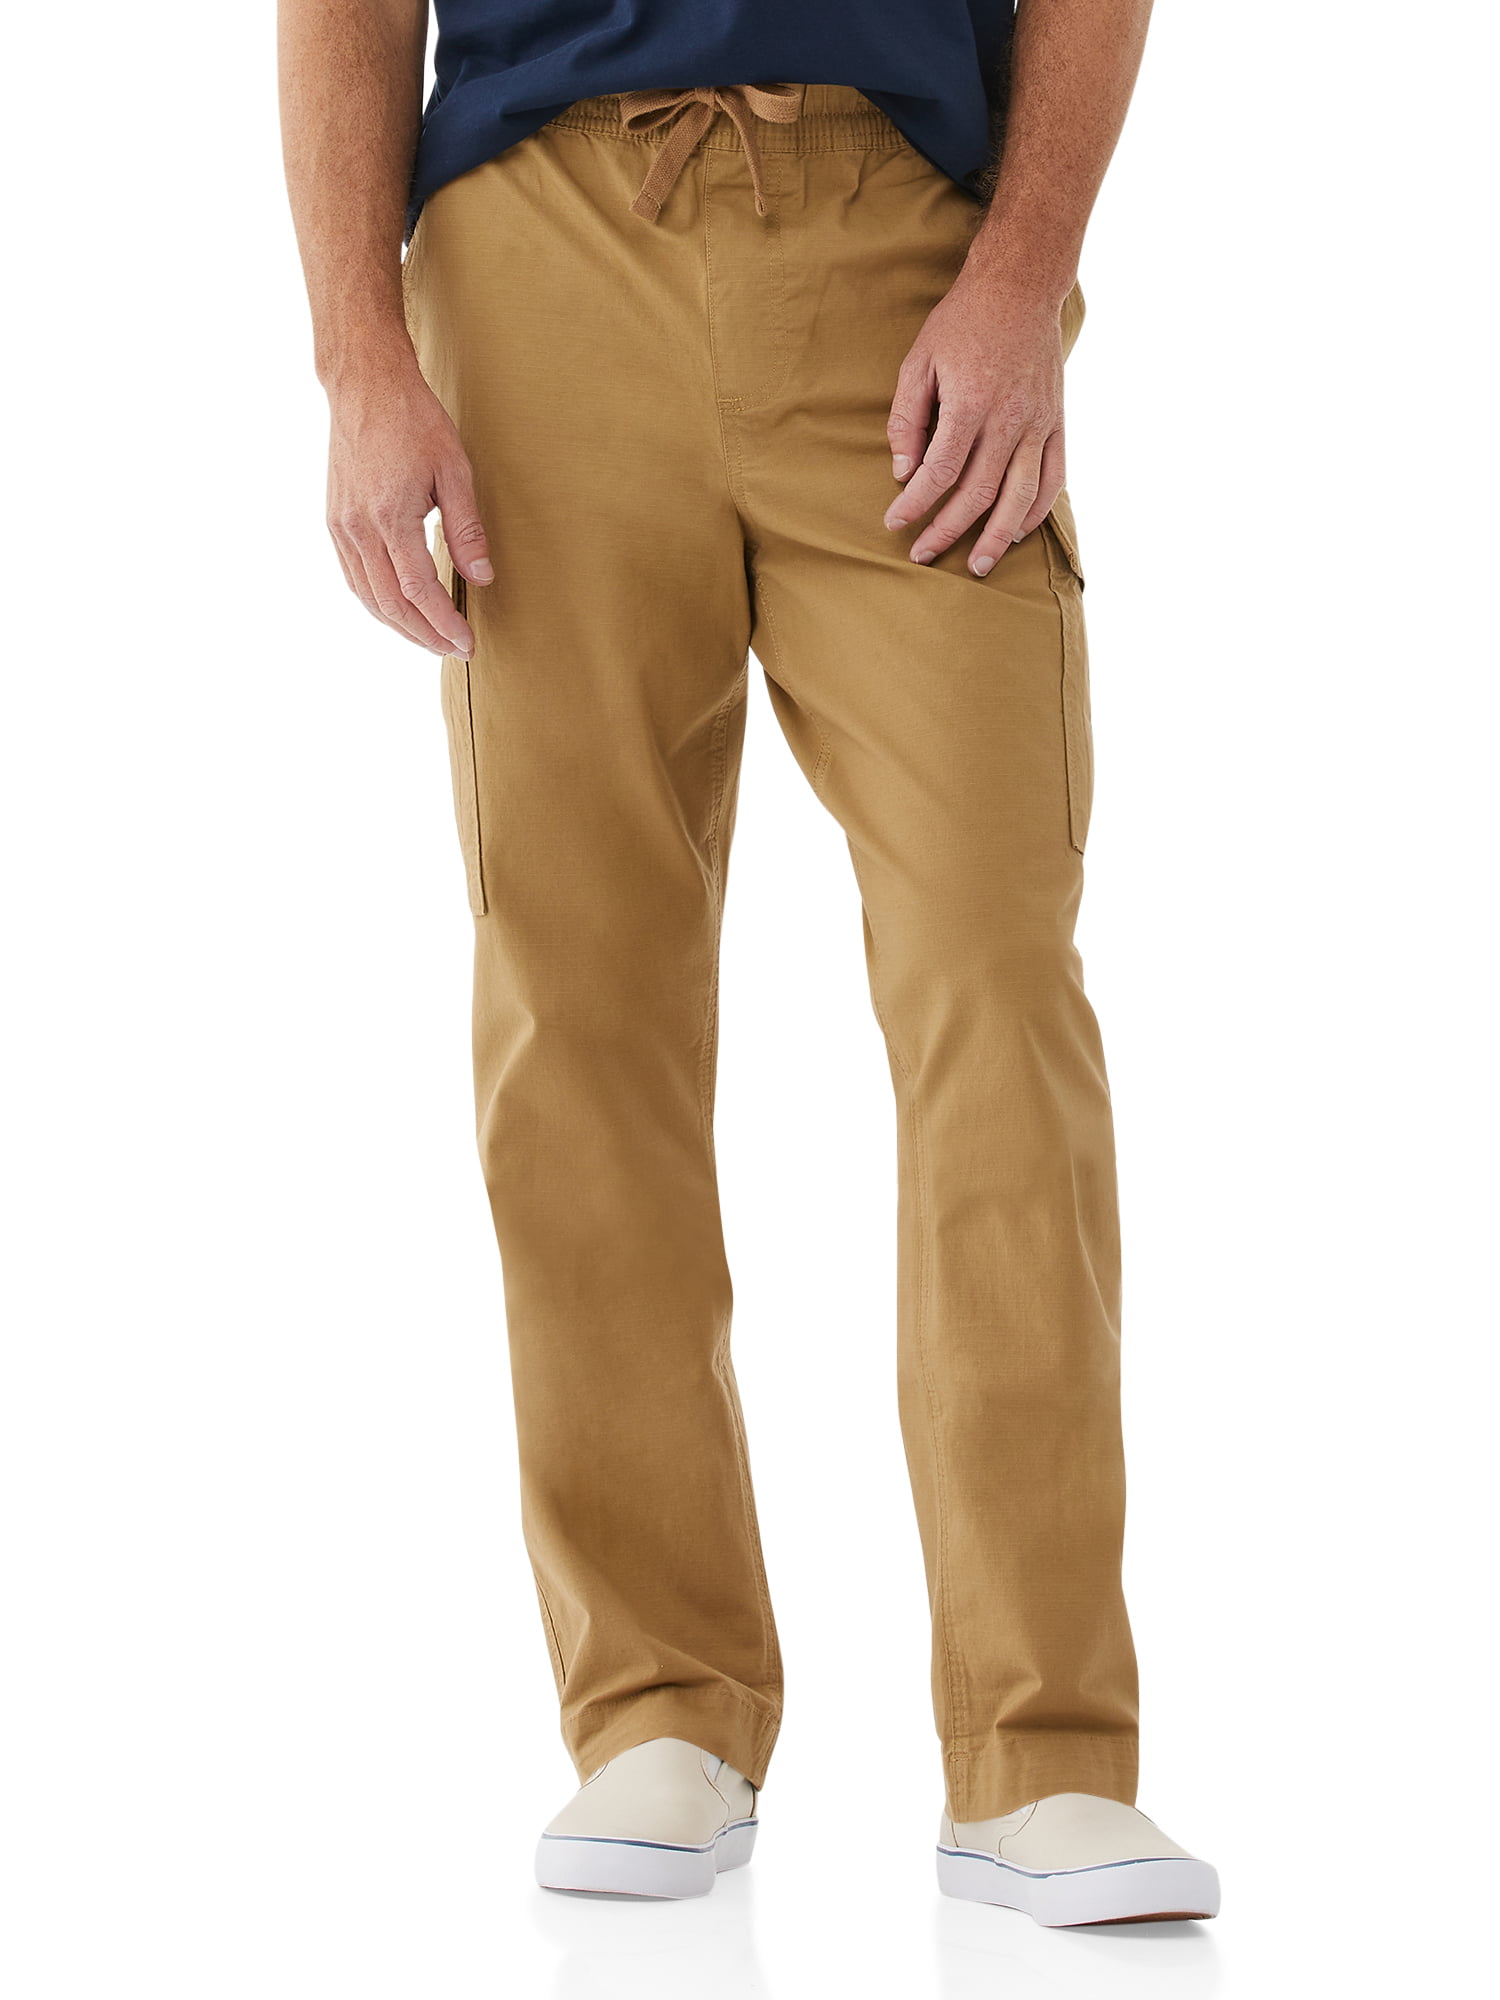 Free Assembly Men's Cargo Pants with E-Waist - Walmart.com